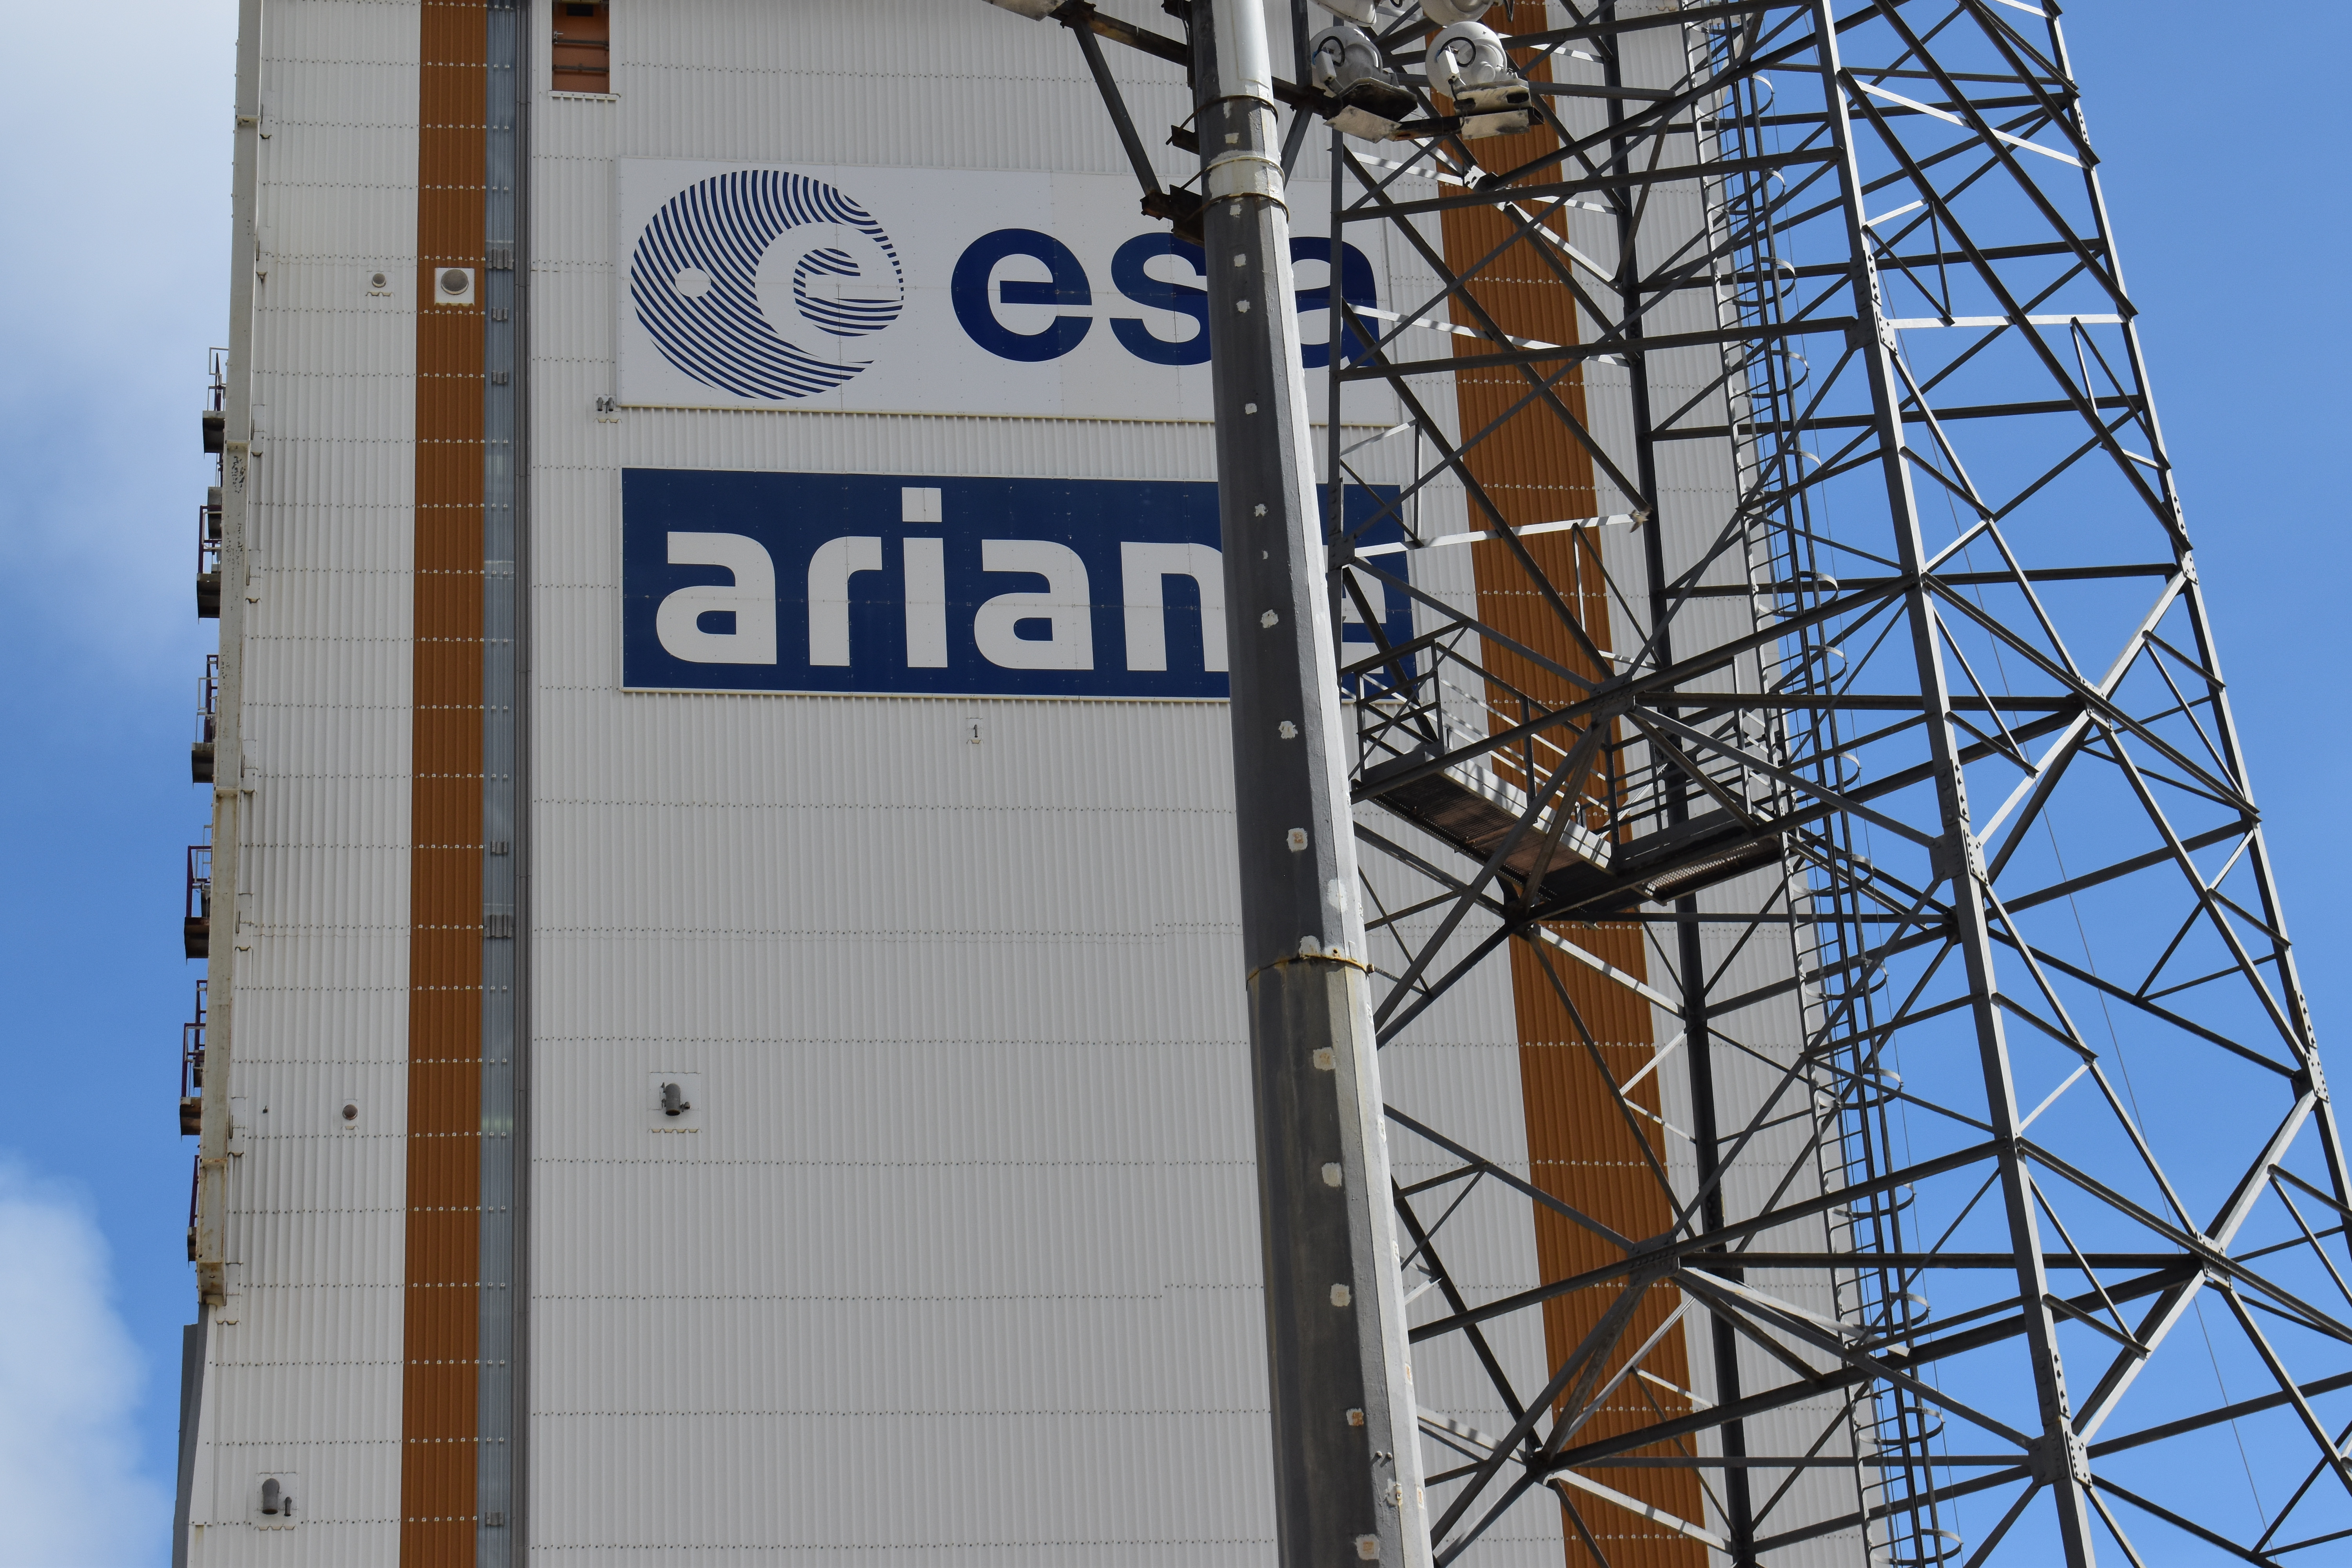 Le nouveau tir de la fusée Ariane reporté à ce samedi 1er août